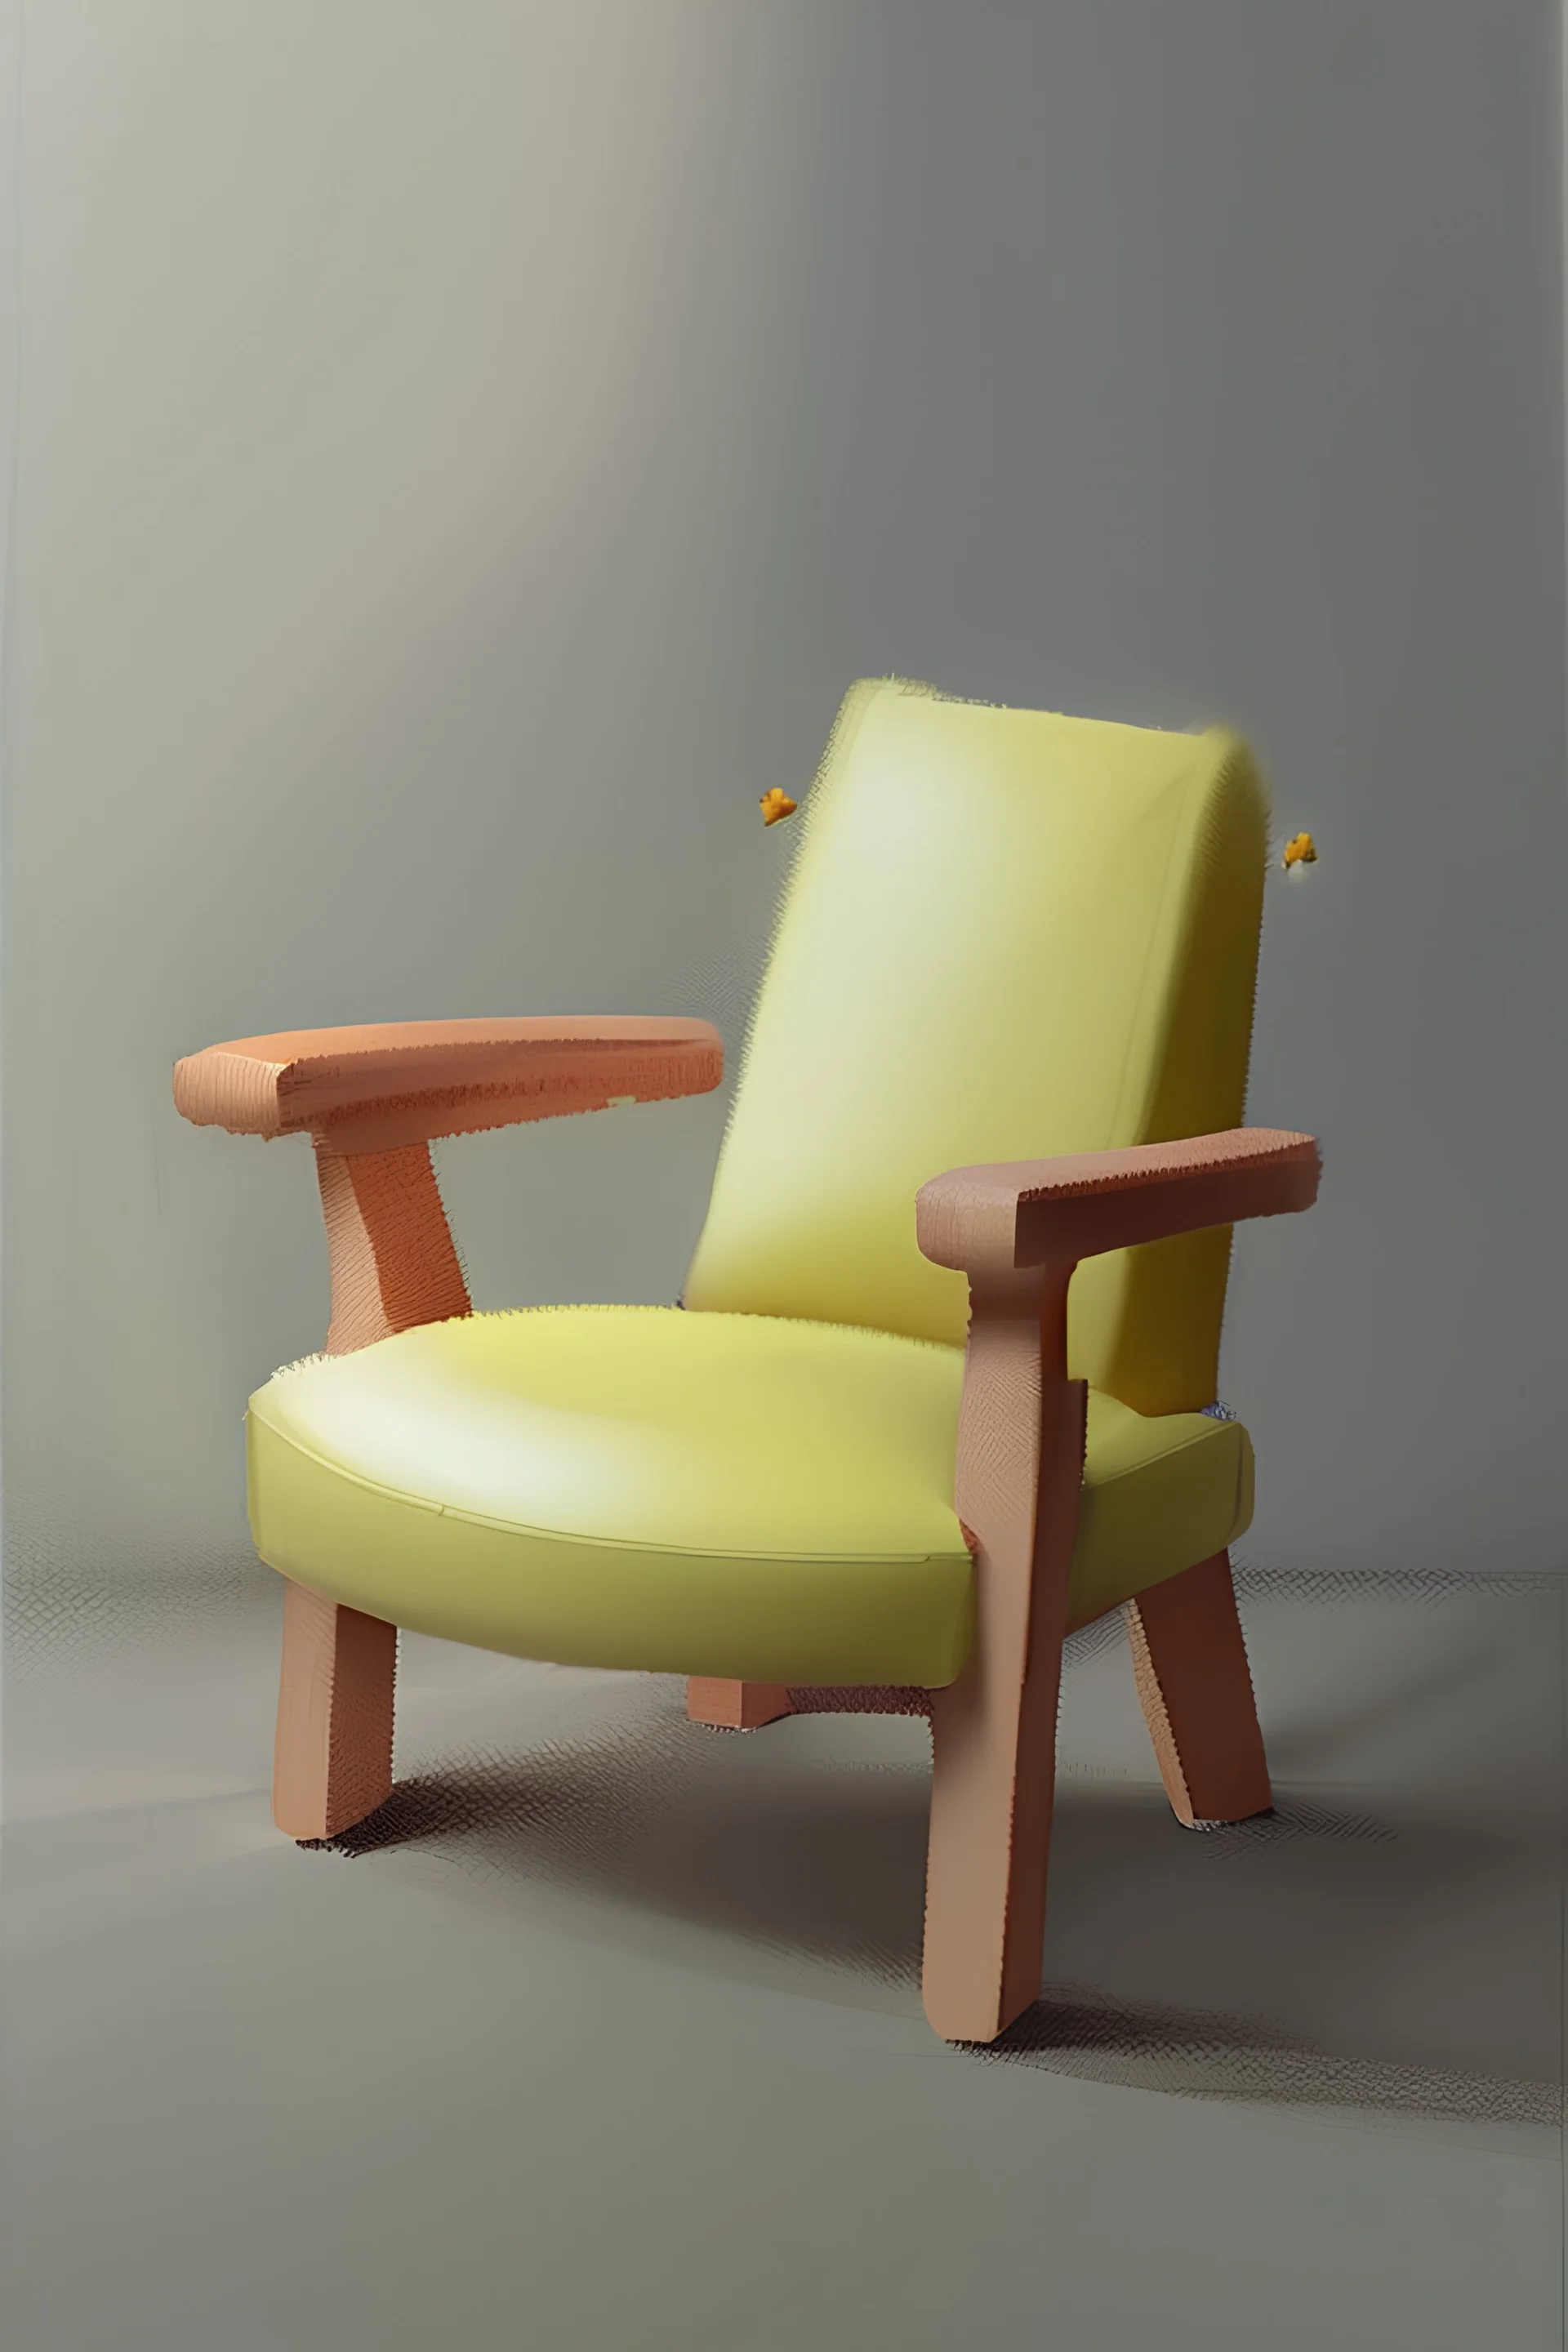 Lemon,chair,sky,deli,feet,booger,realistic